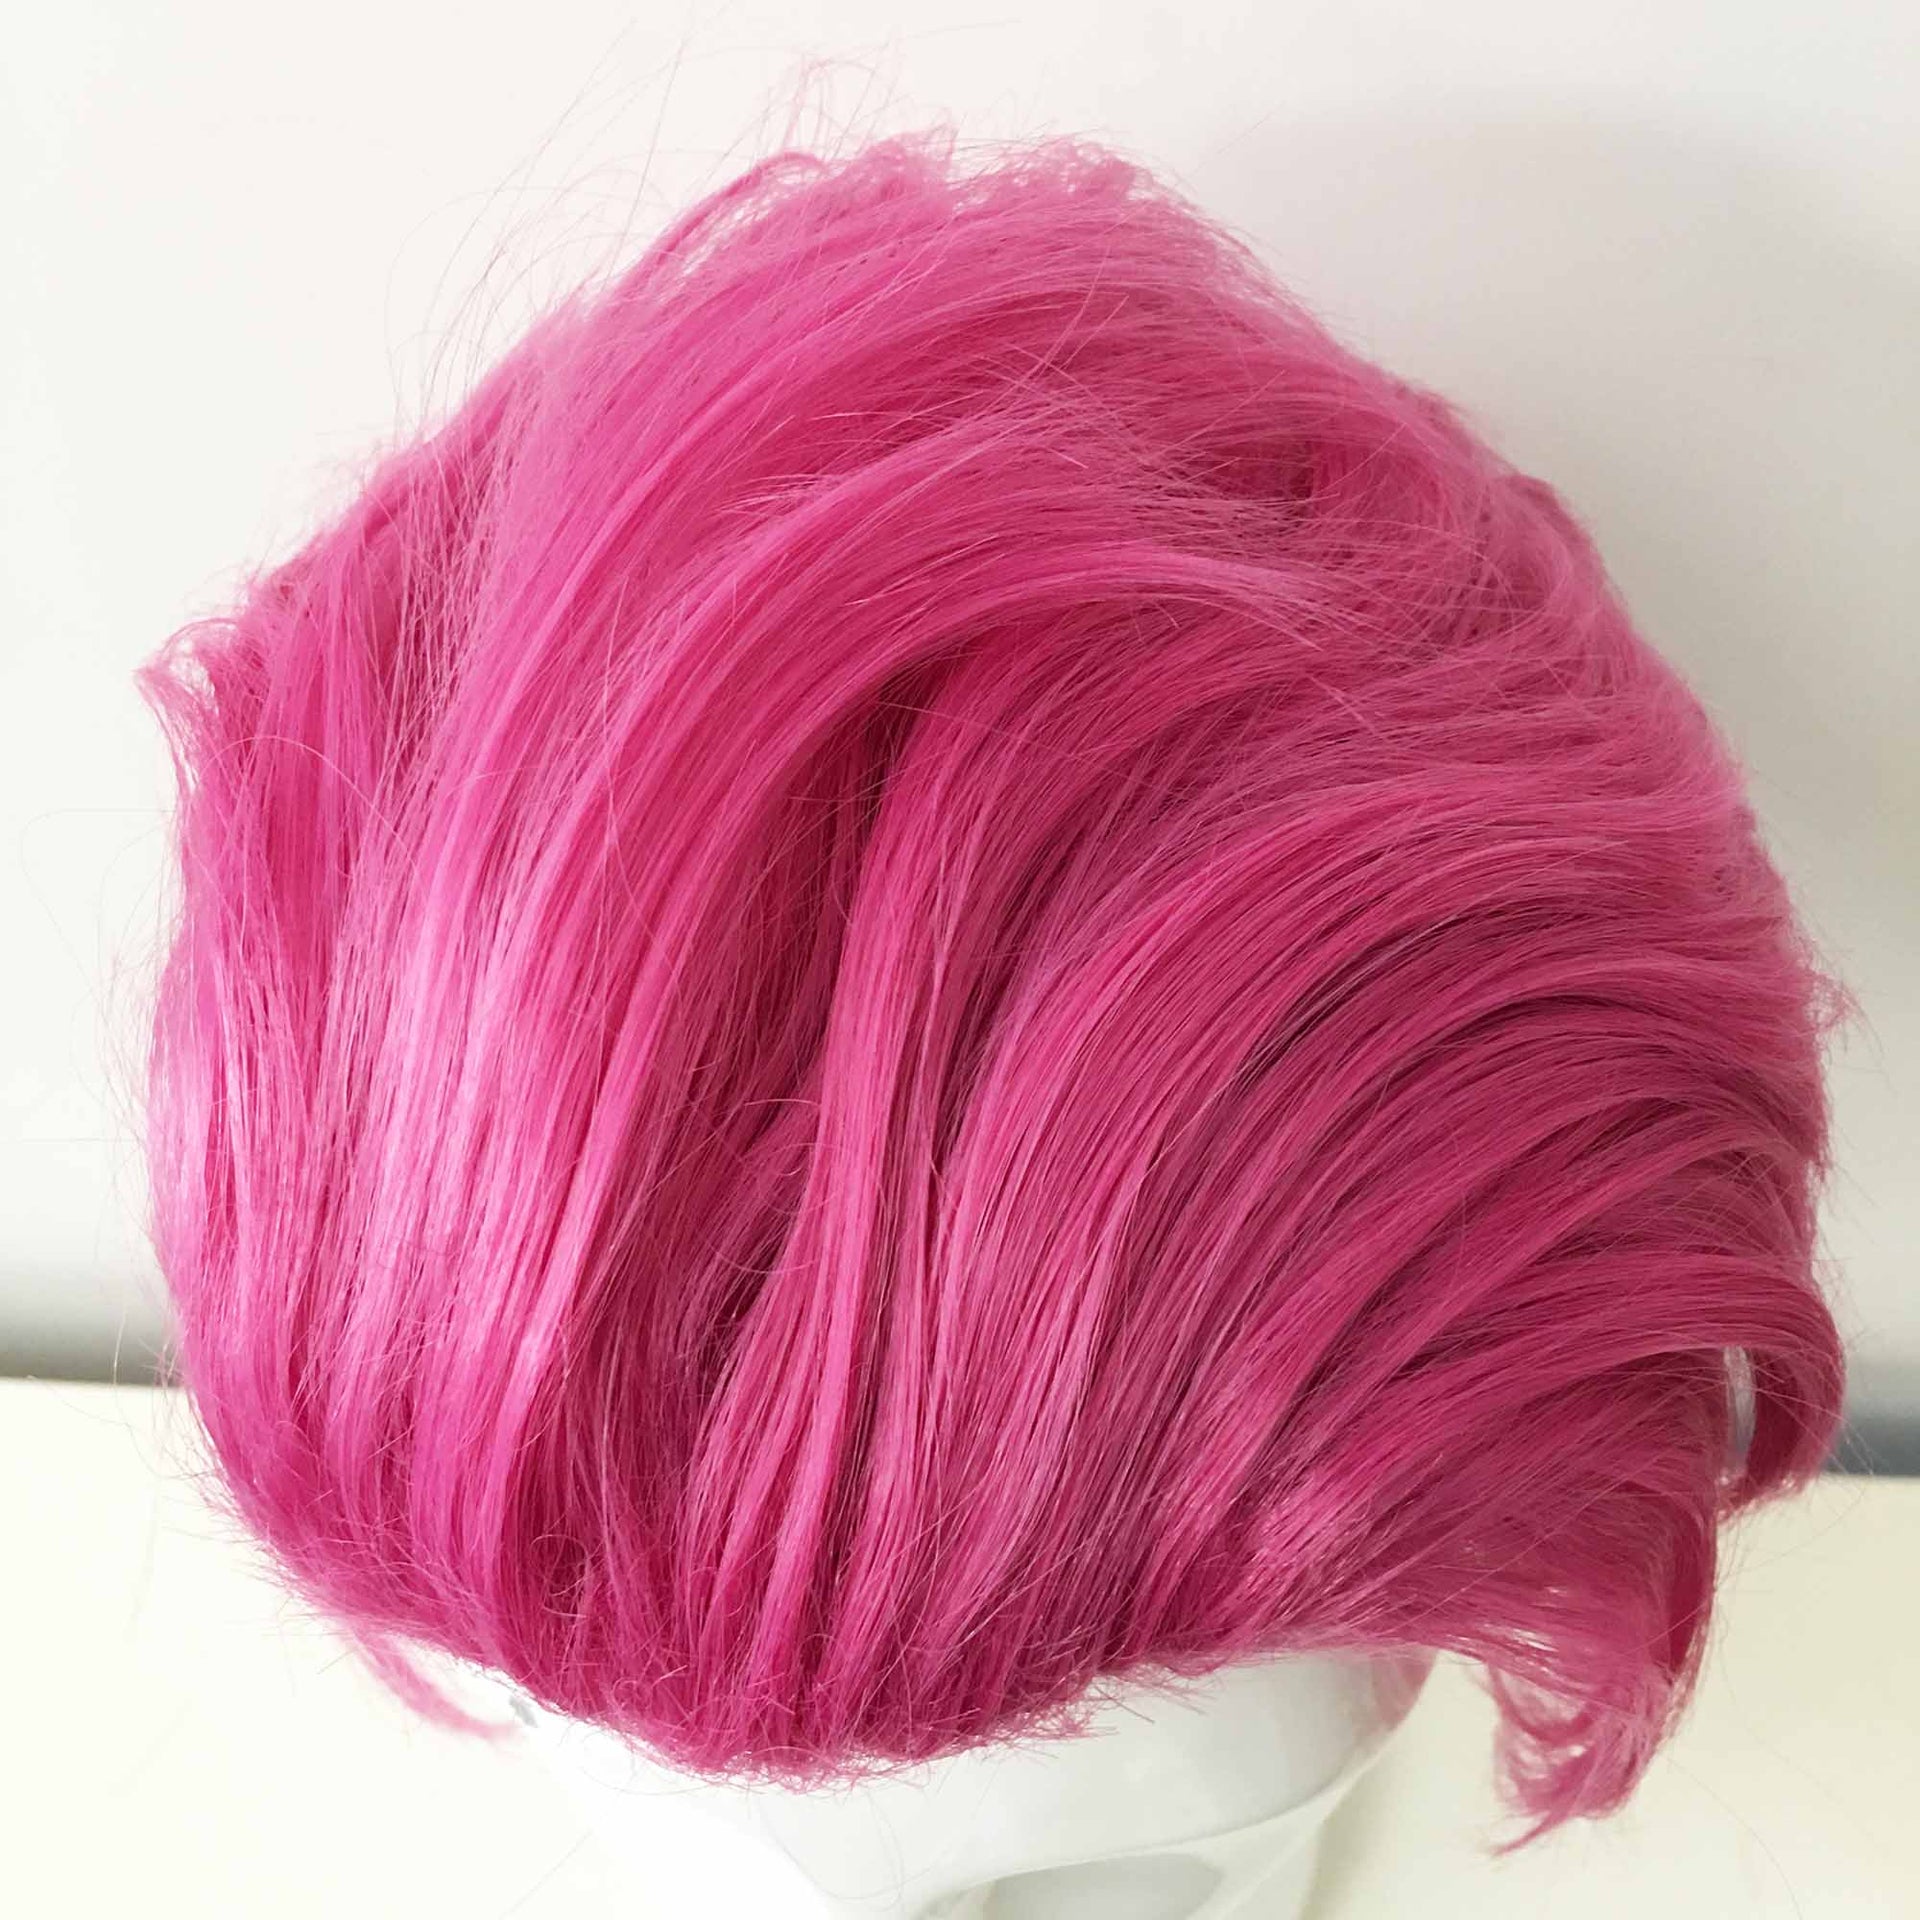 nevermindyrhead Men Magenta Pink Short Straight Slicked Back Cosplay Wig